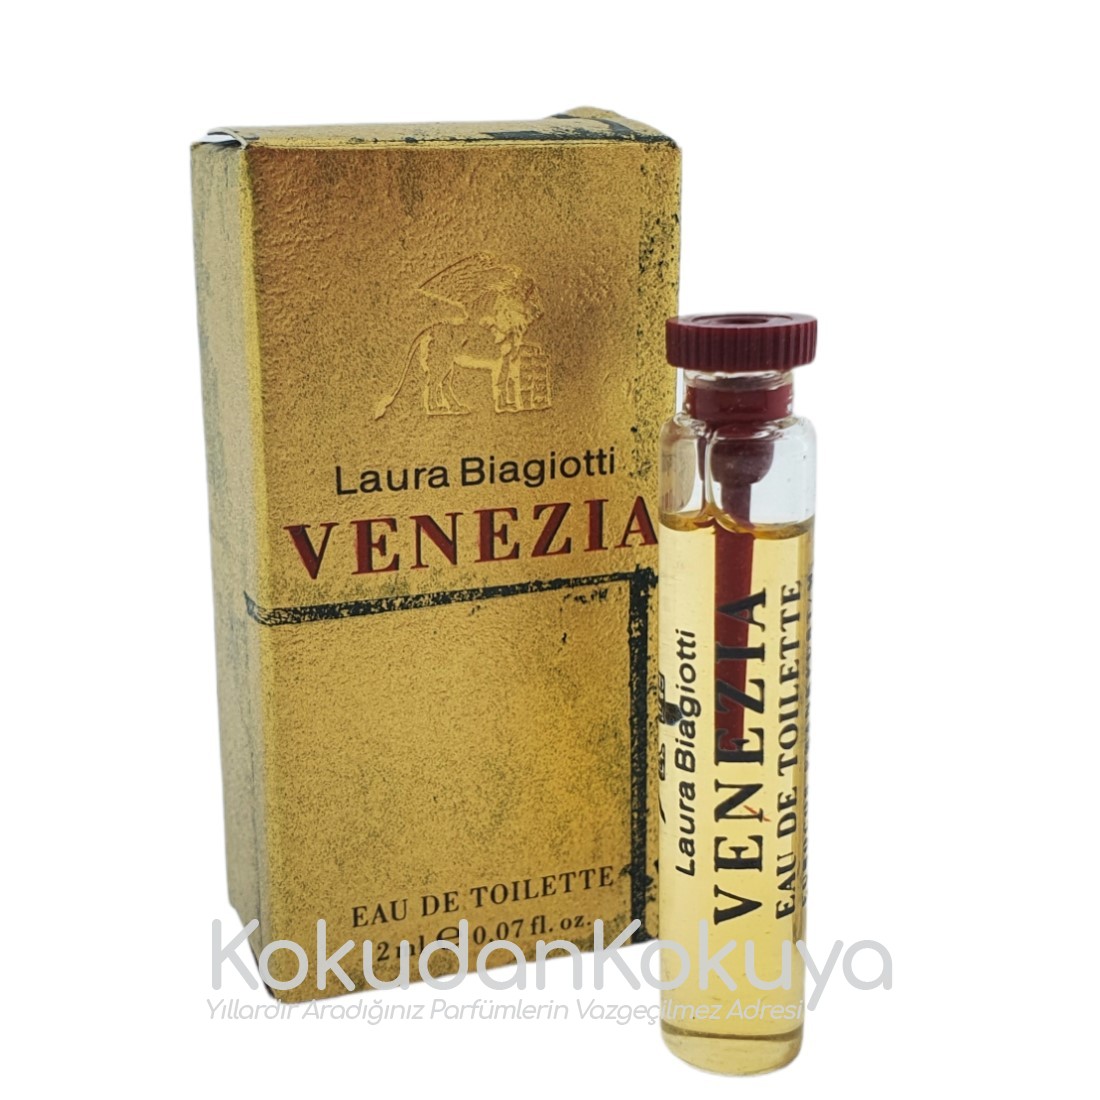 LAURA BIAGIOTTI Venezia (Vintage) Parfüm Kadın 2ml Minyatür (Mini Perfume) Dökme 